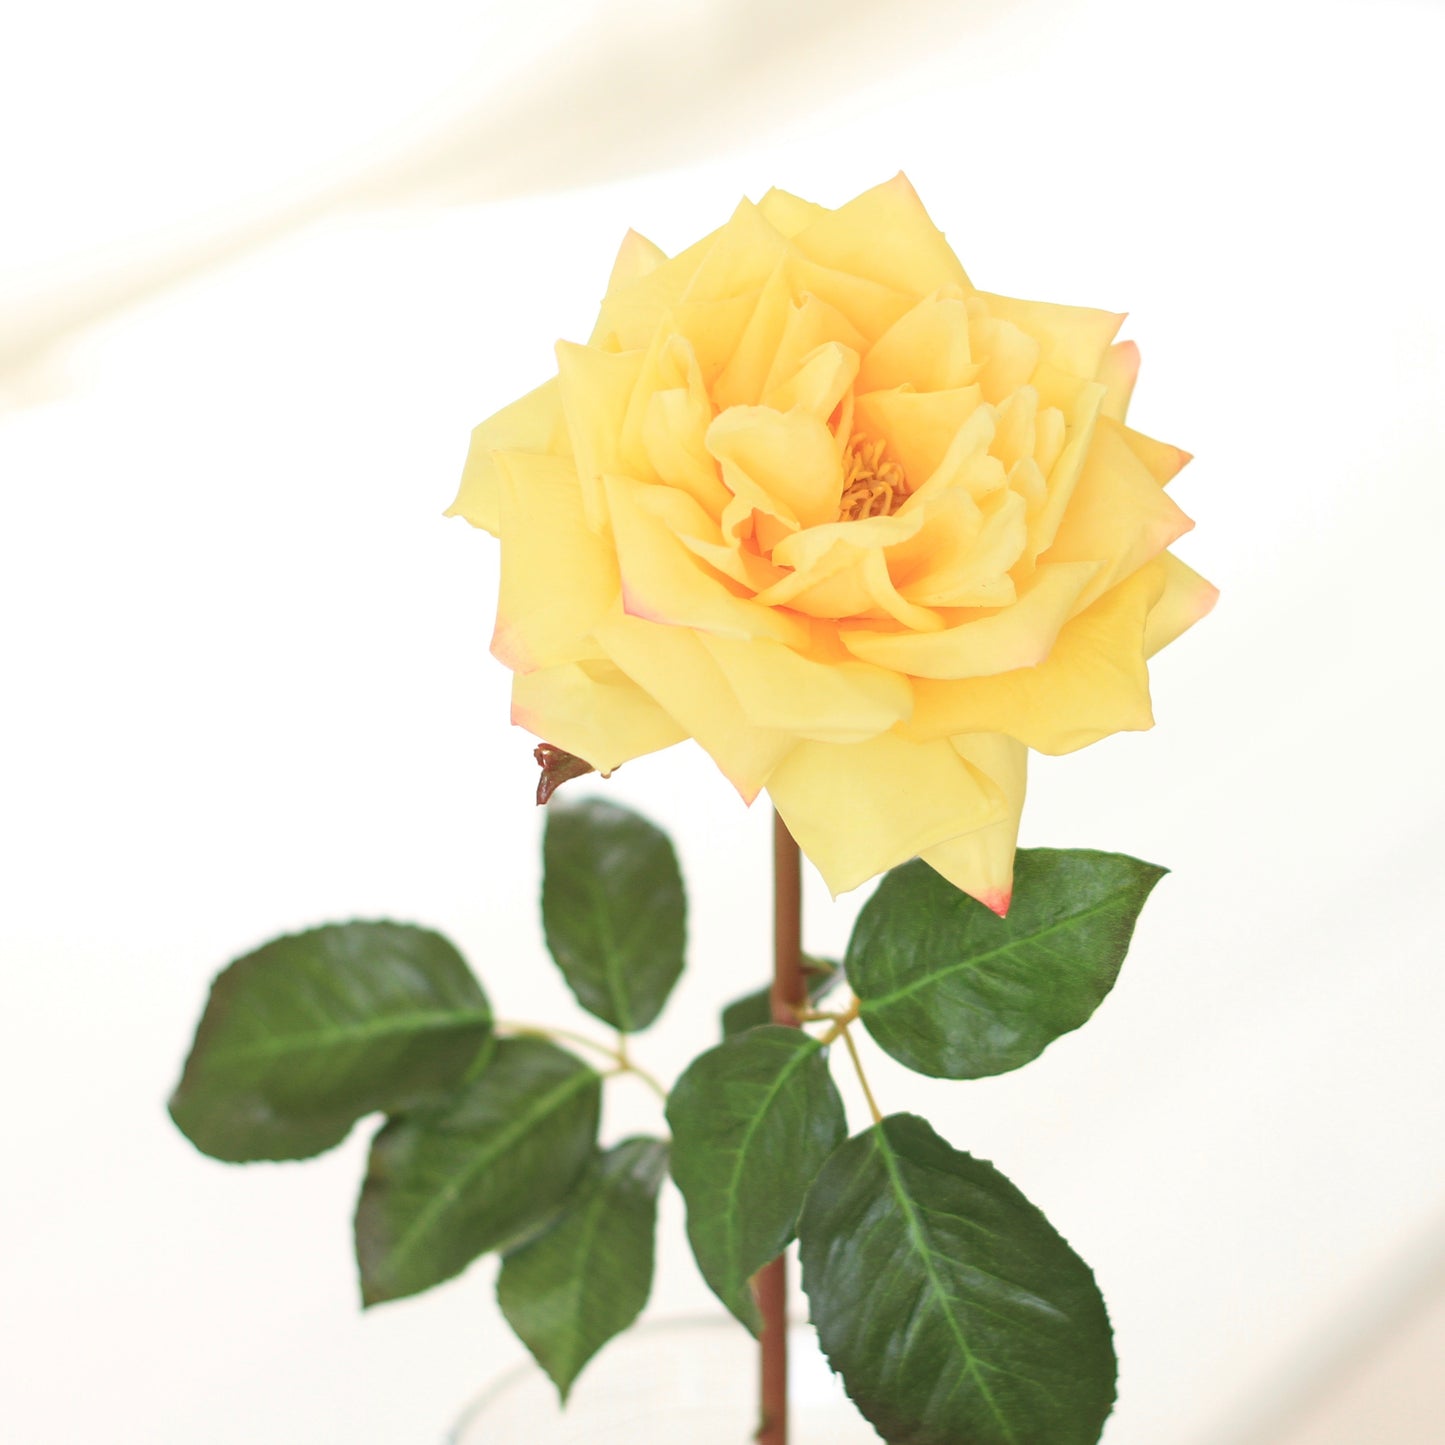 Garden Rose Yellow